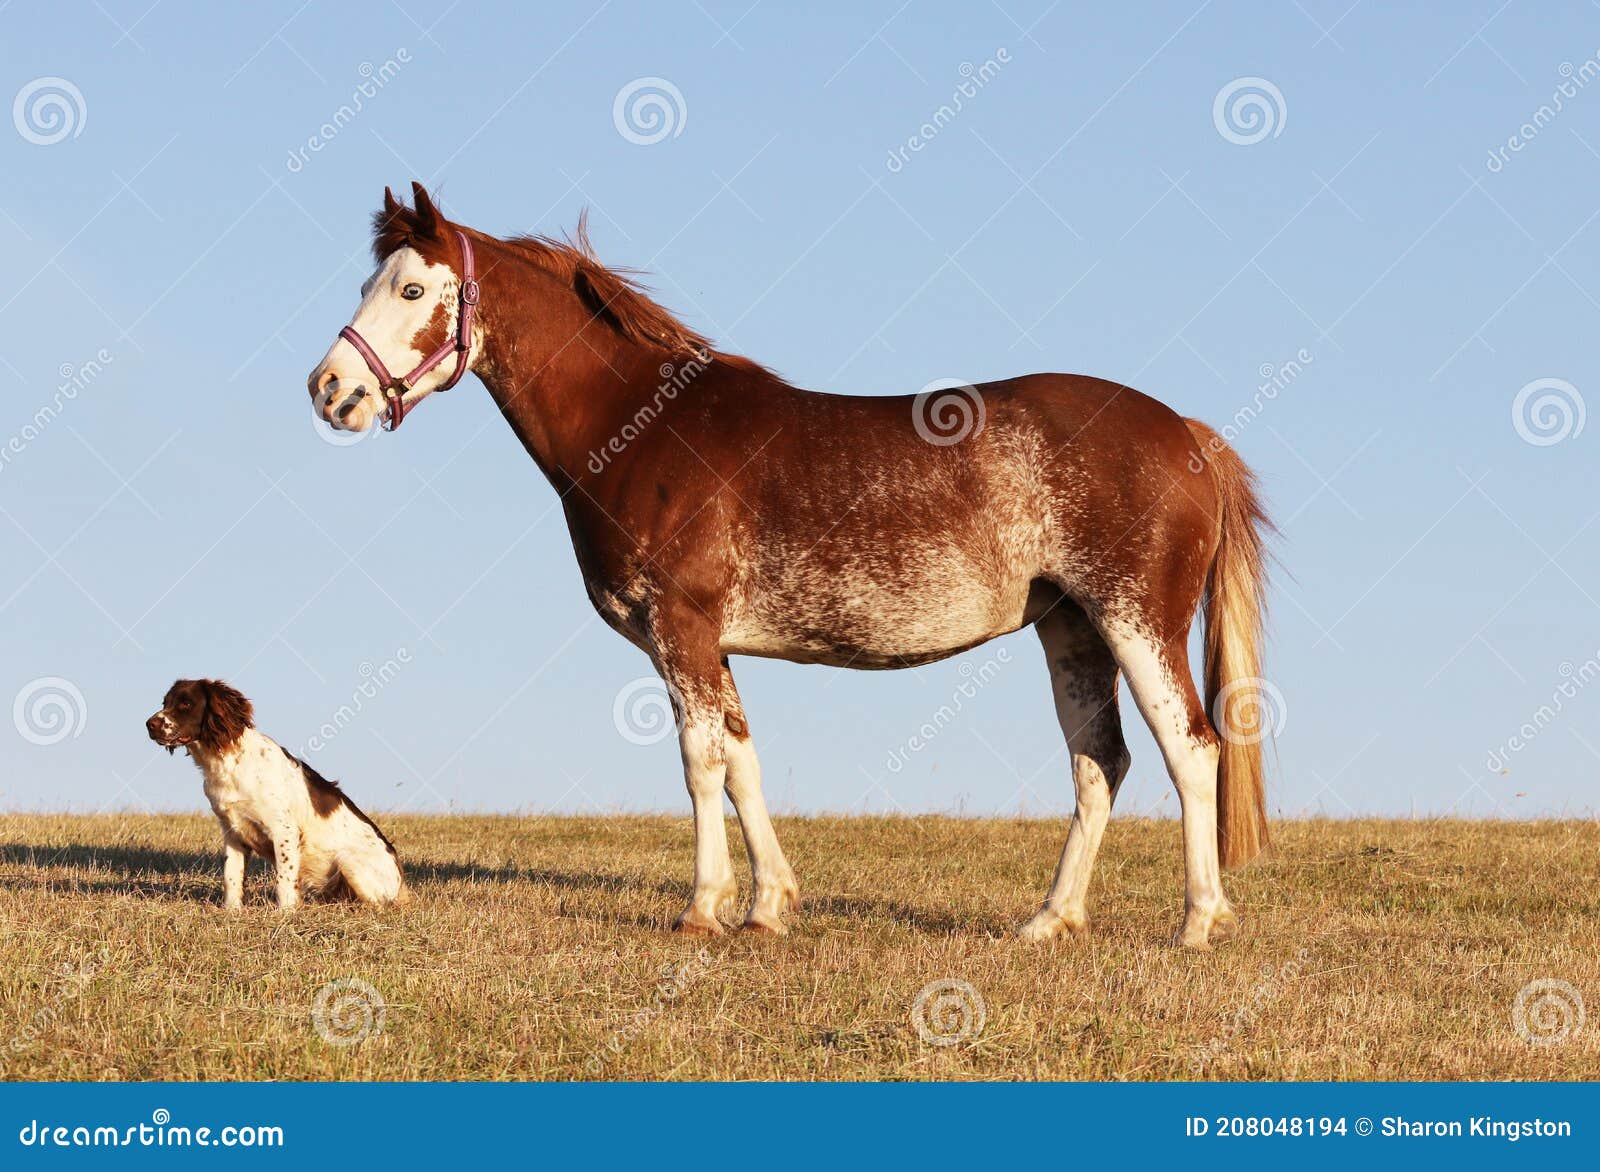 pretty pony and companion dog